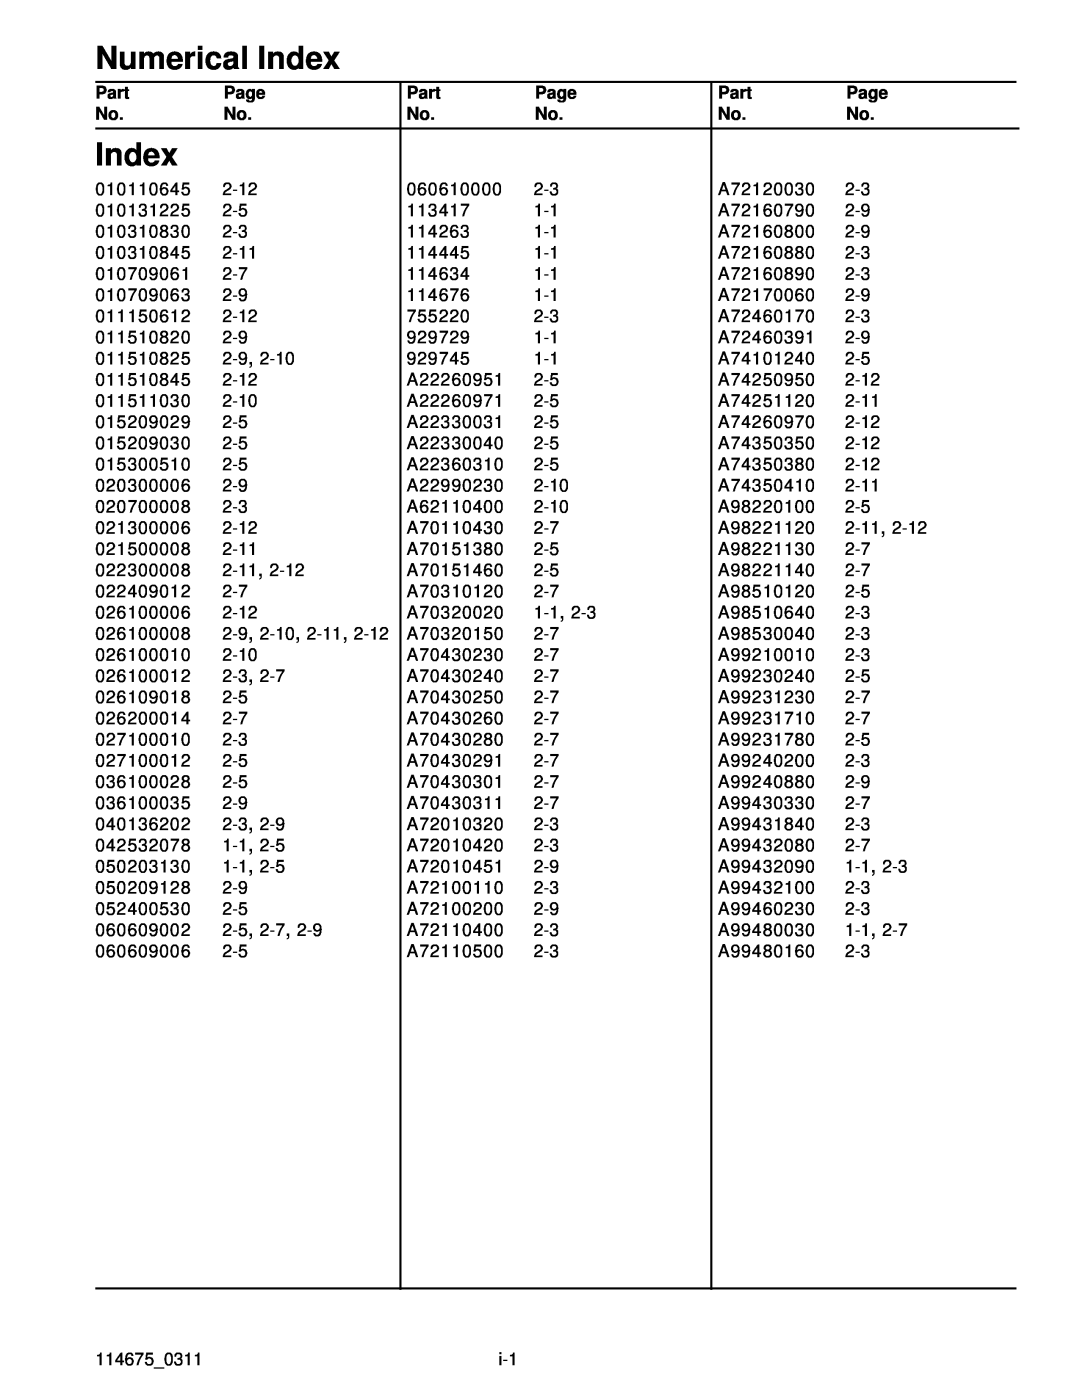 Hustler Turf 114675_0311 C-1 manual Numerical Index, Part, Page 